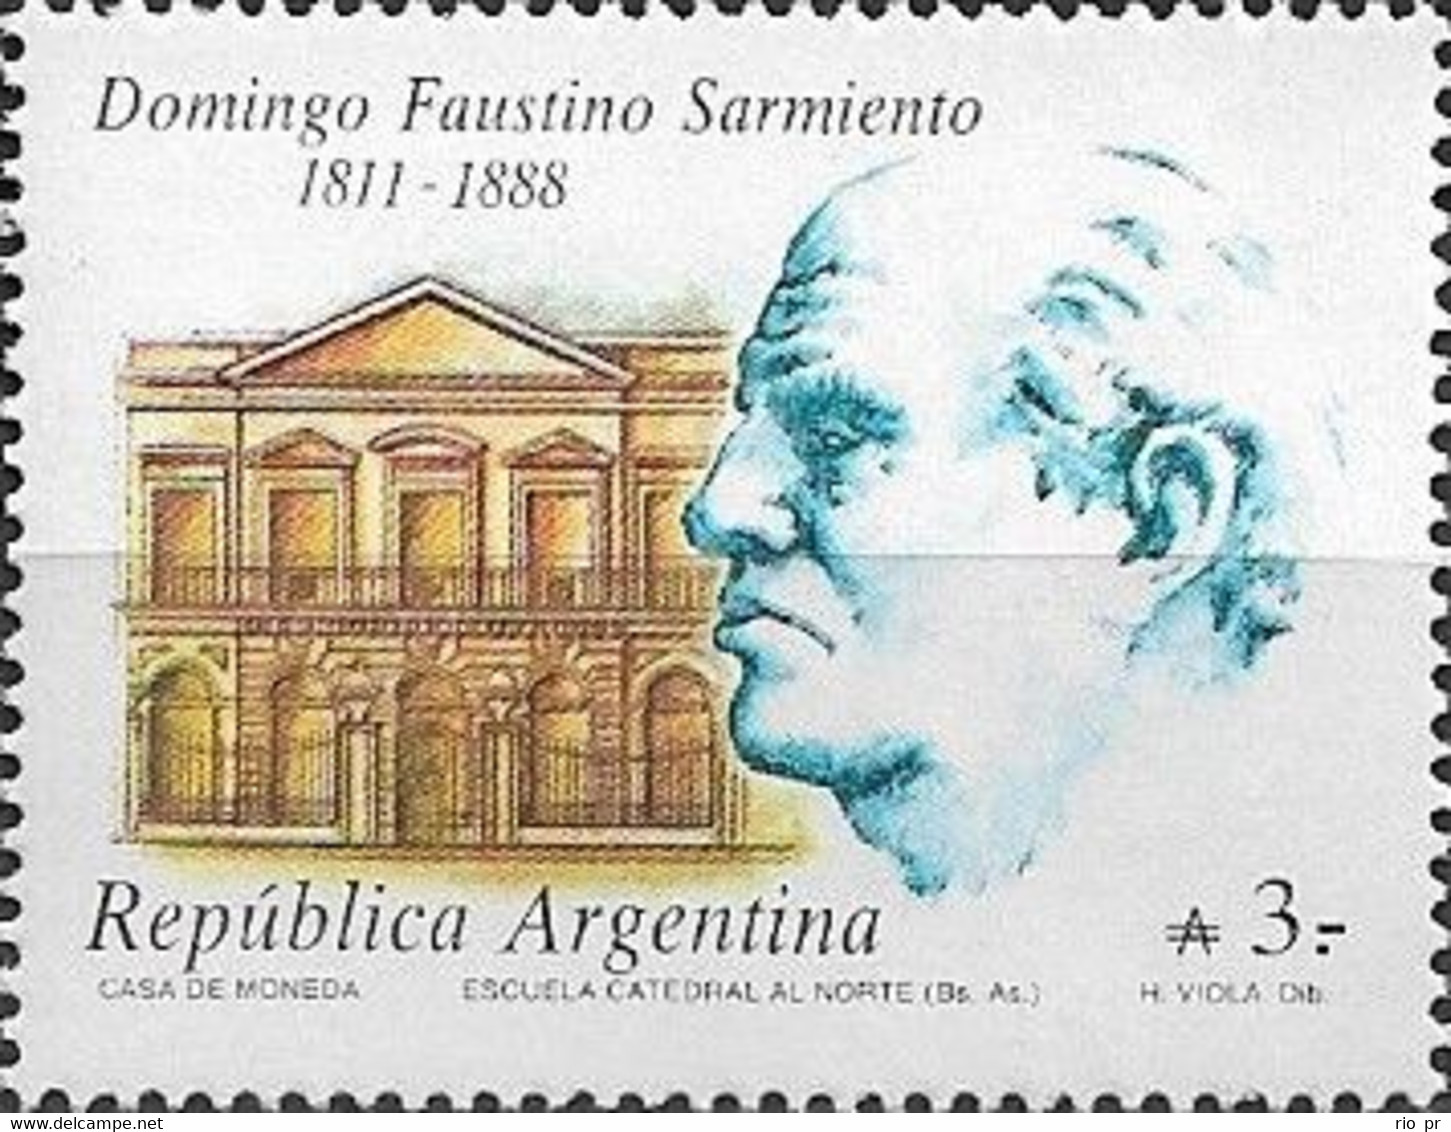 ARGENTINA - DEATH CENTENARY OF DOMINGO FAUSTINO SARMIENTO (1811-1888), ARGENTINE ACTIVIST/STATESMAN 1988 - MNH - Nuevos